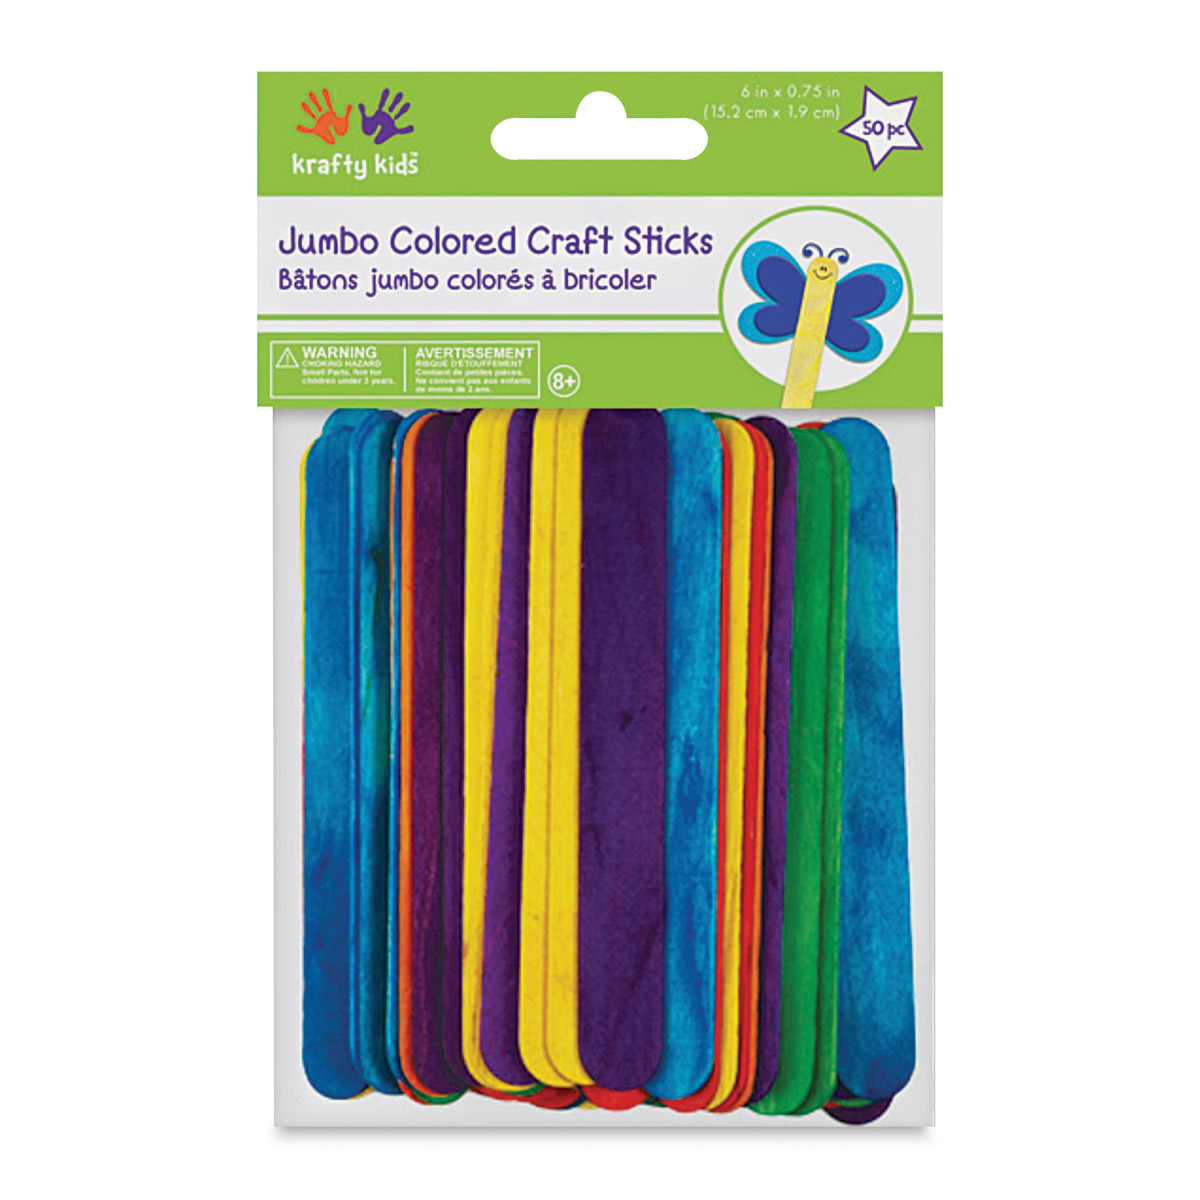 Krafty Kids Colored Craft Sticks - Jumbo, 3/4 W x 6 L, Assorted